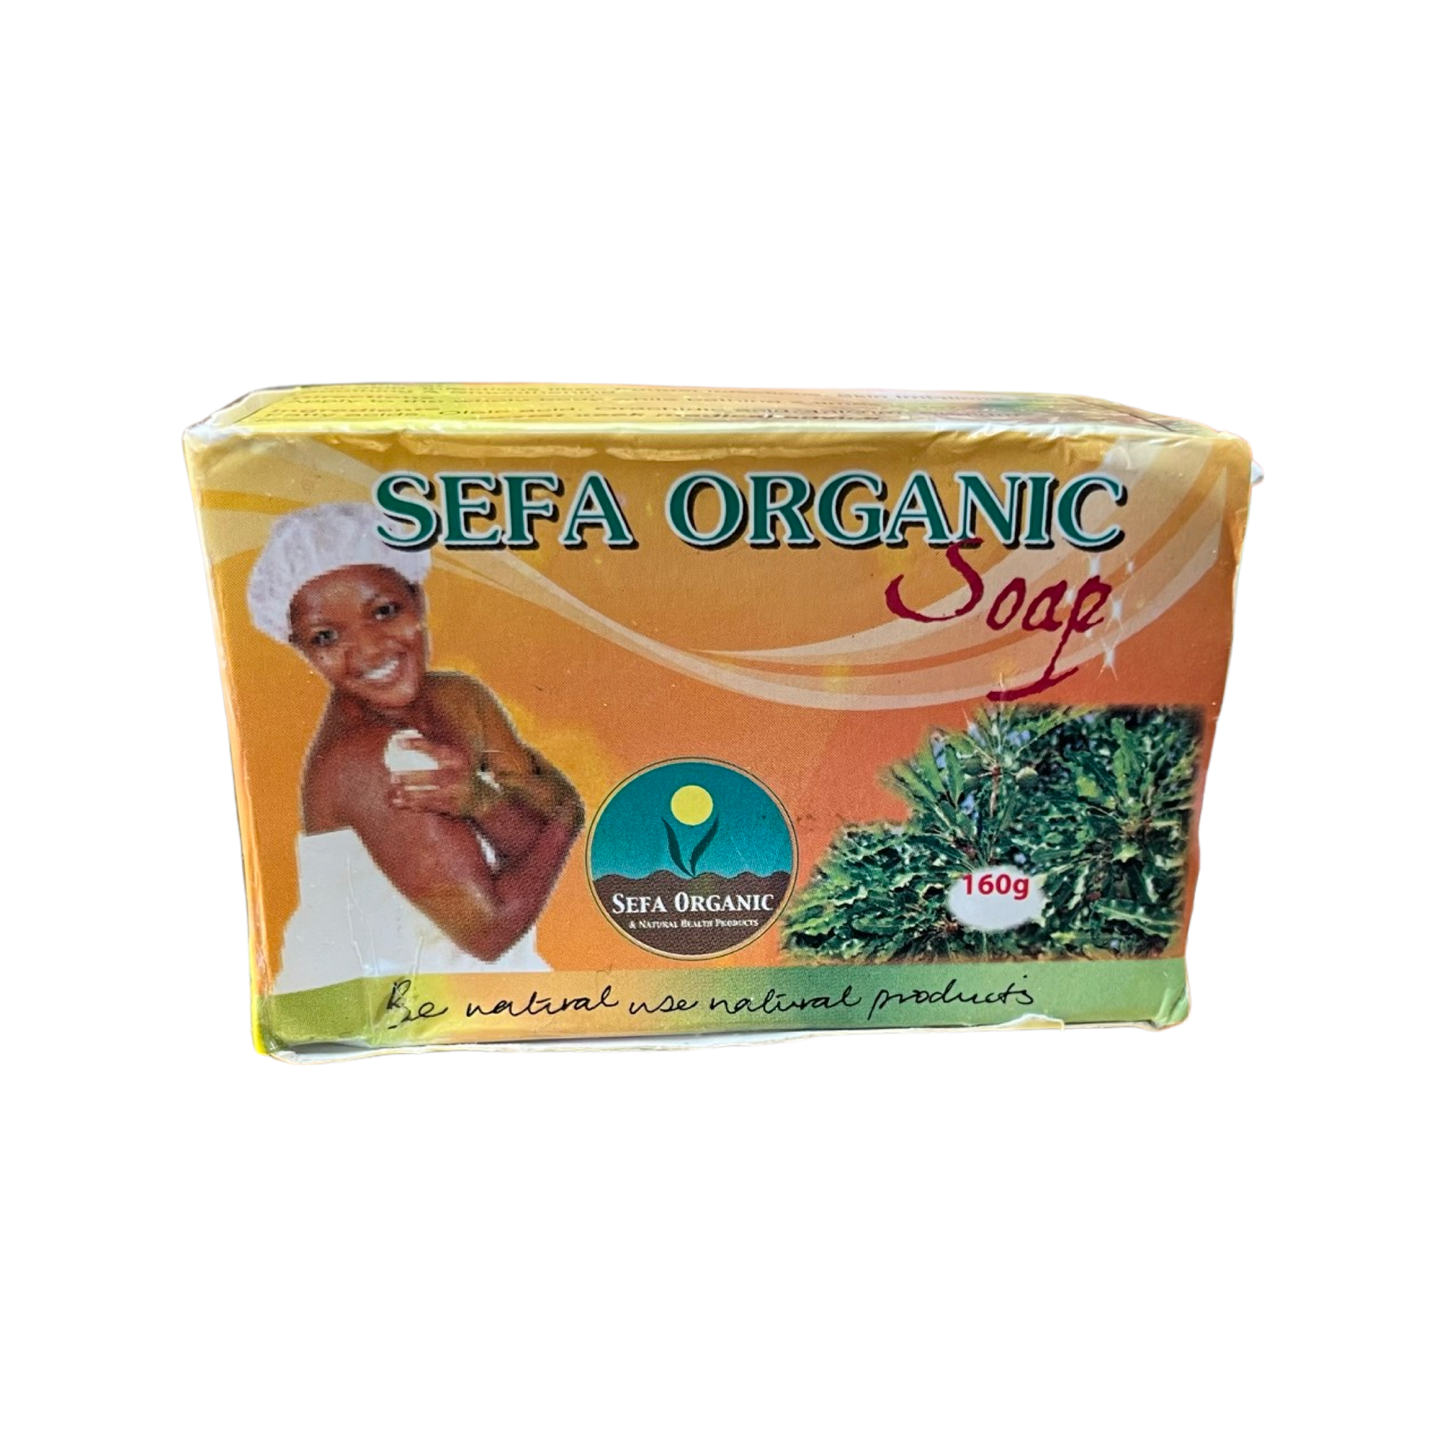 Sefa Organic Soap